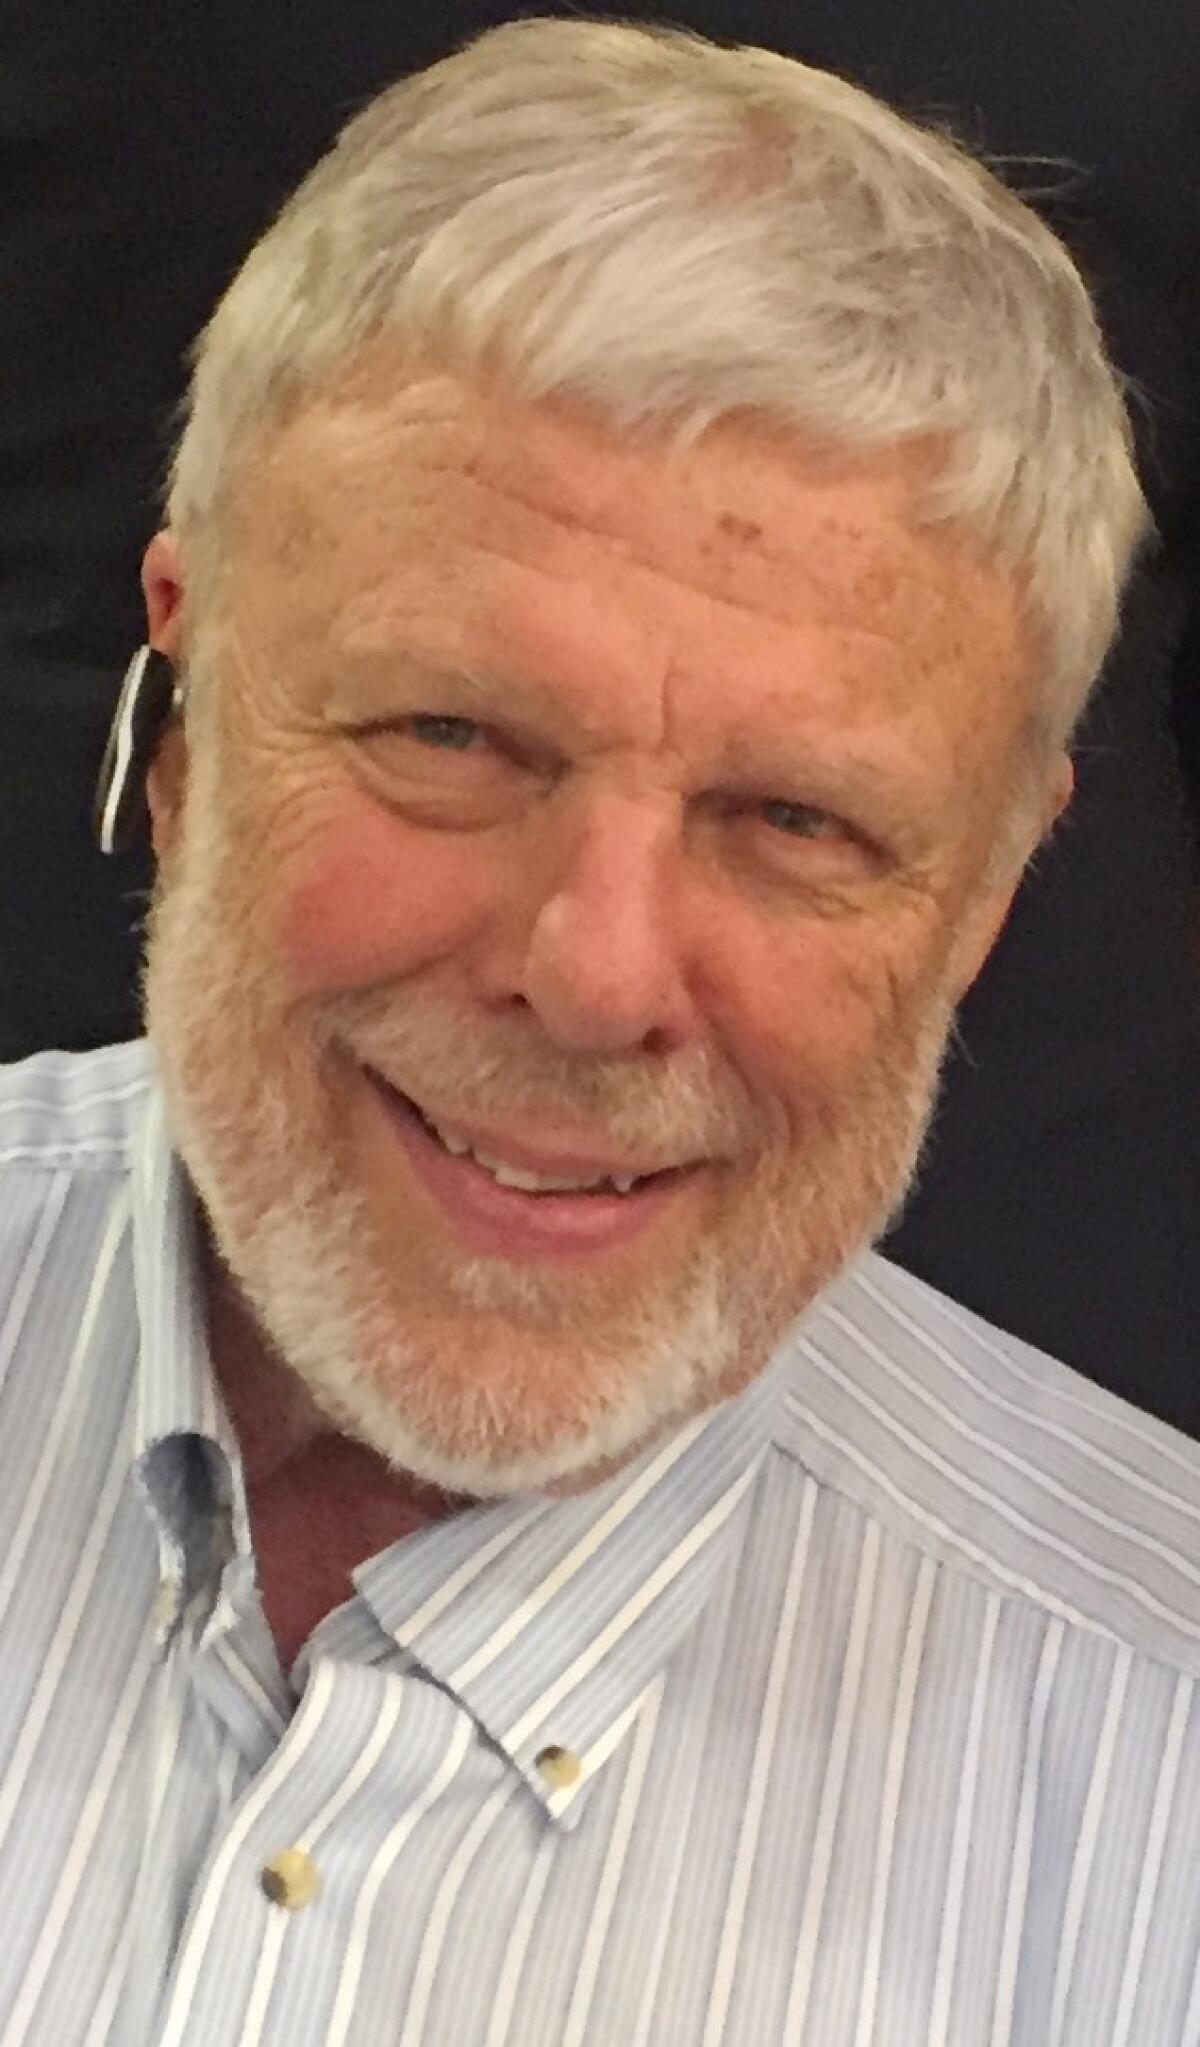 ROARS named the late ham radio enthusiast Richard “Dick” Warren an honorary lifetime member.